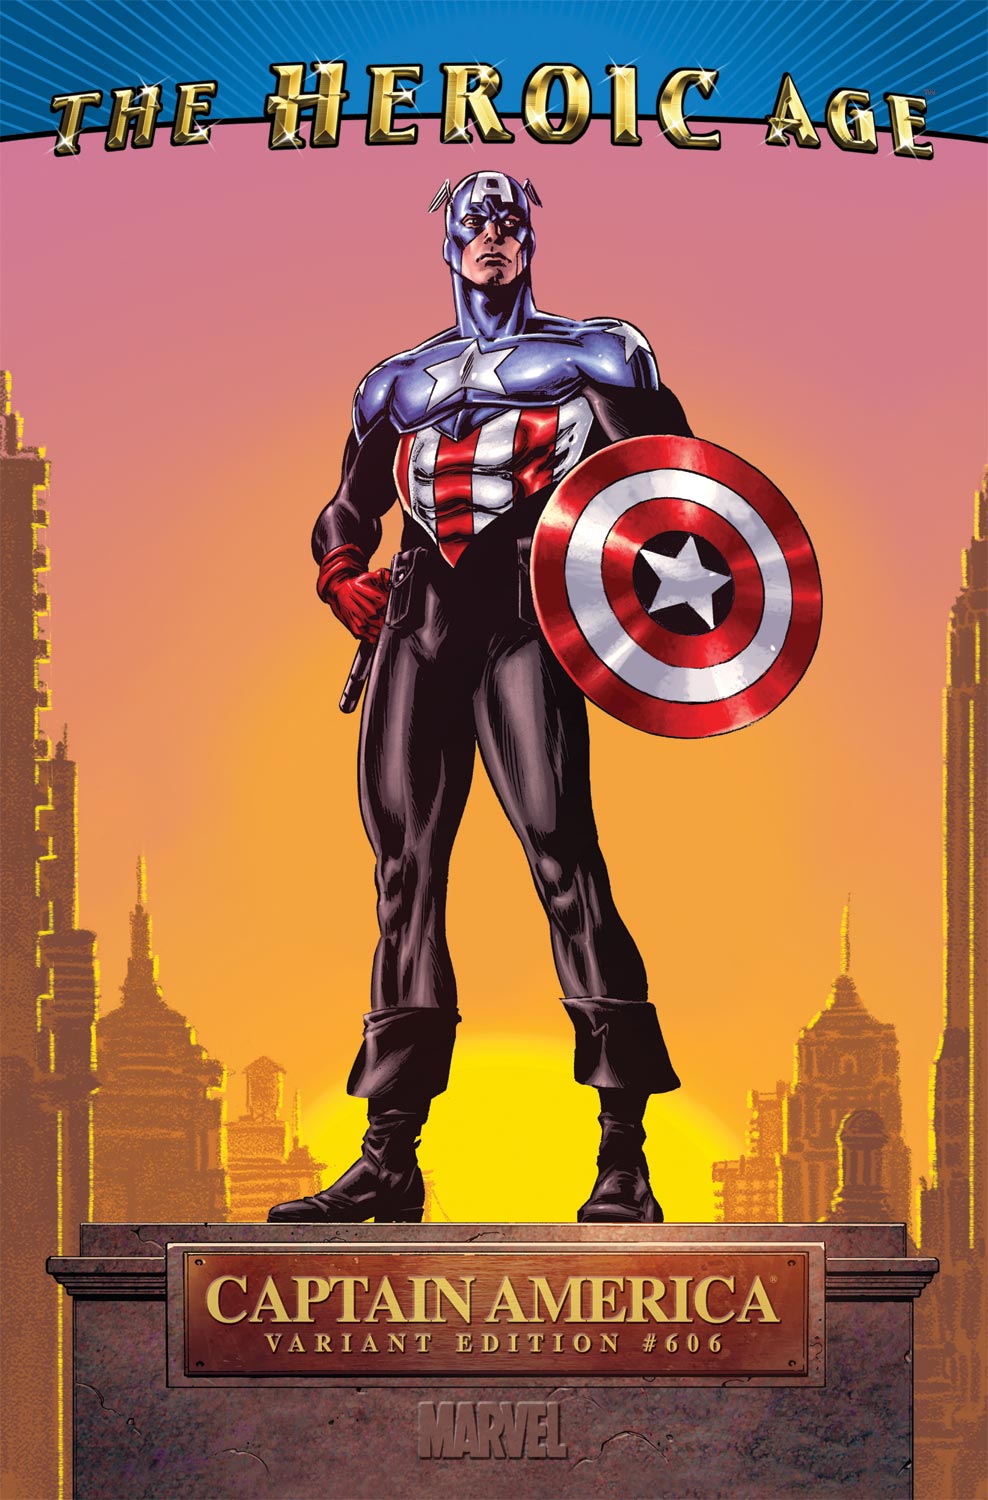 Captain America (2004) #606 (HEROIC AGE VARIANT)